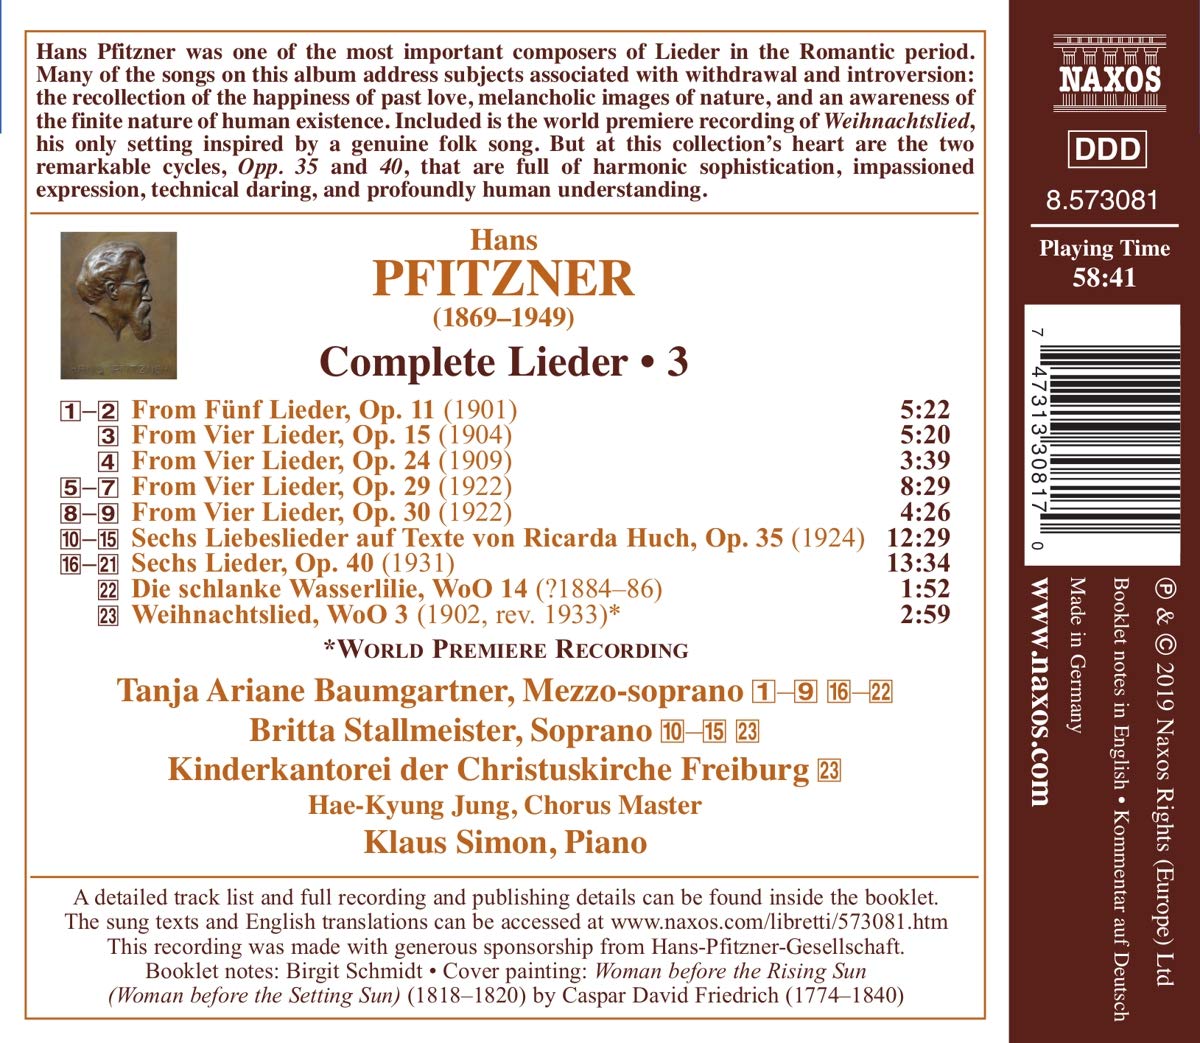 Tanja Ariane Baumgartner 한스 피츠너: 가곡 작품 3집 (Hans Pfitzner: Complete Lieder, Vol. 3)